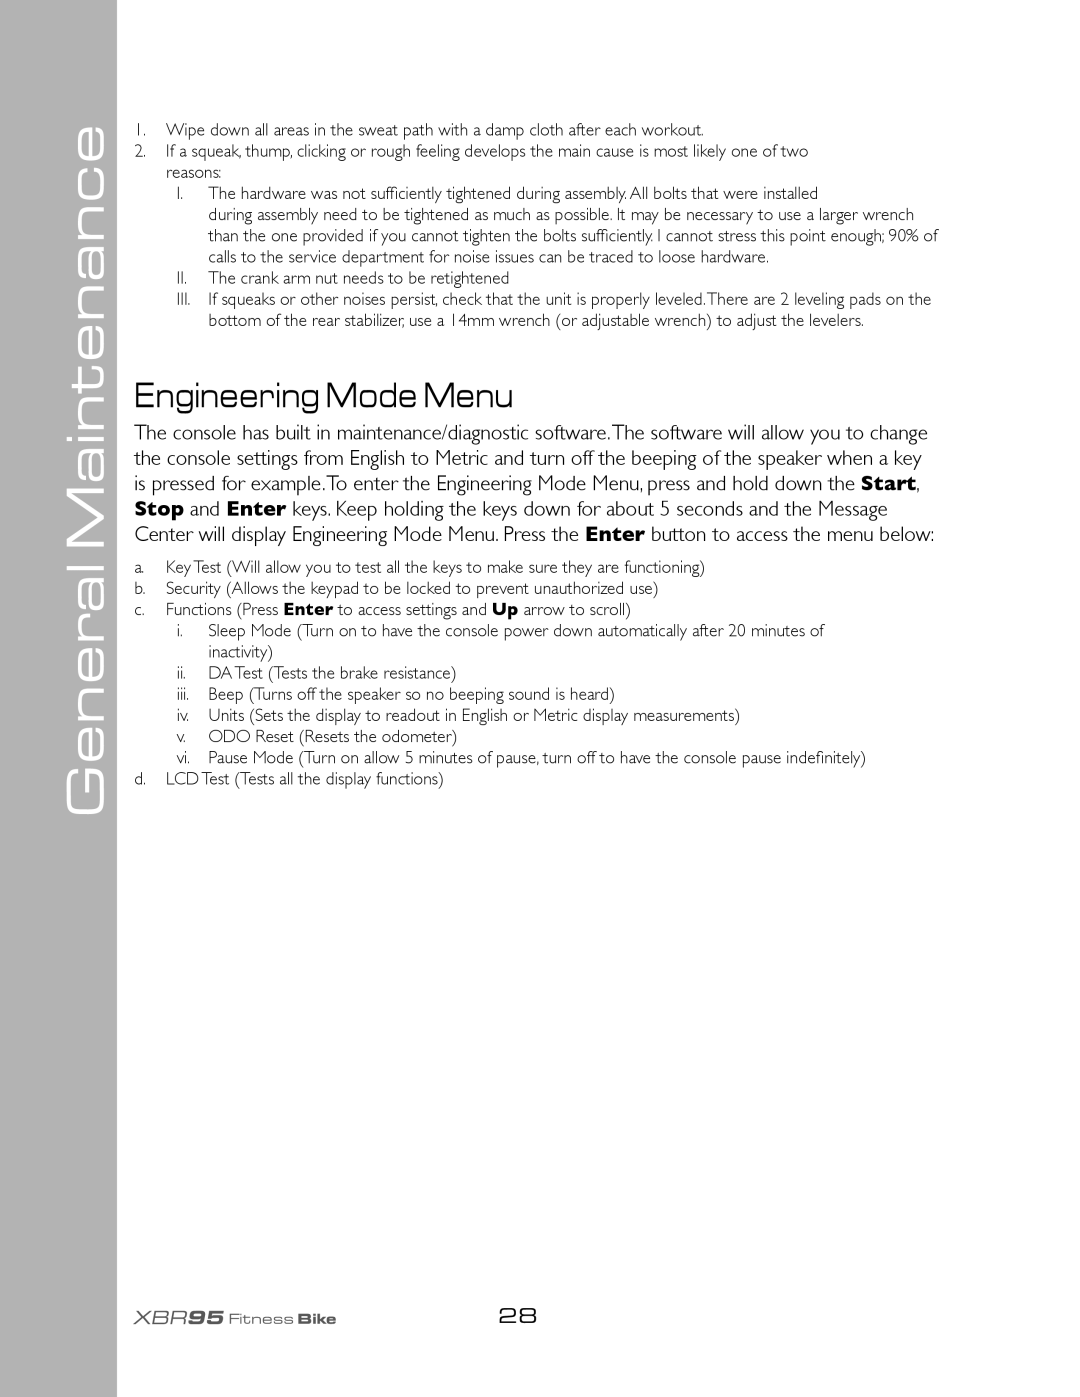 Spirit XBR95 owner manual General Maintenance, Engineering Mode Menu 